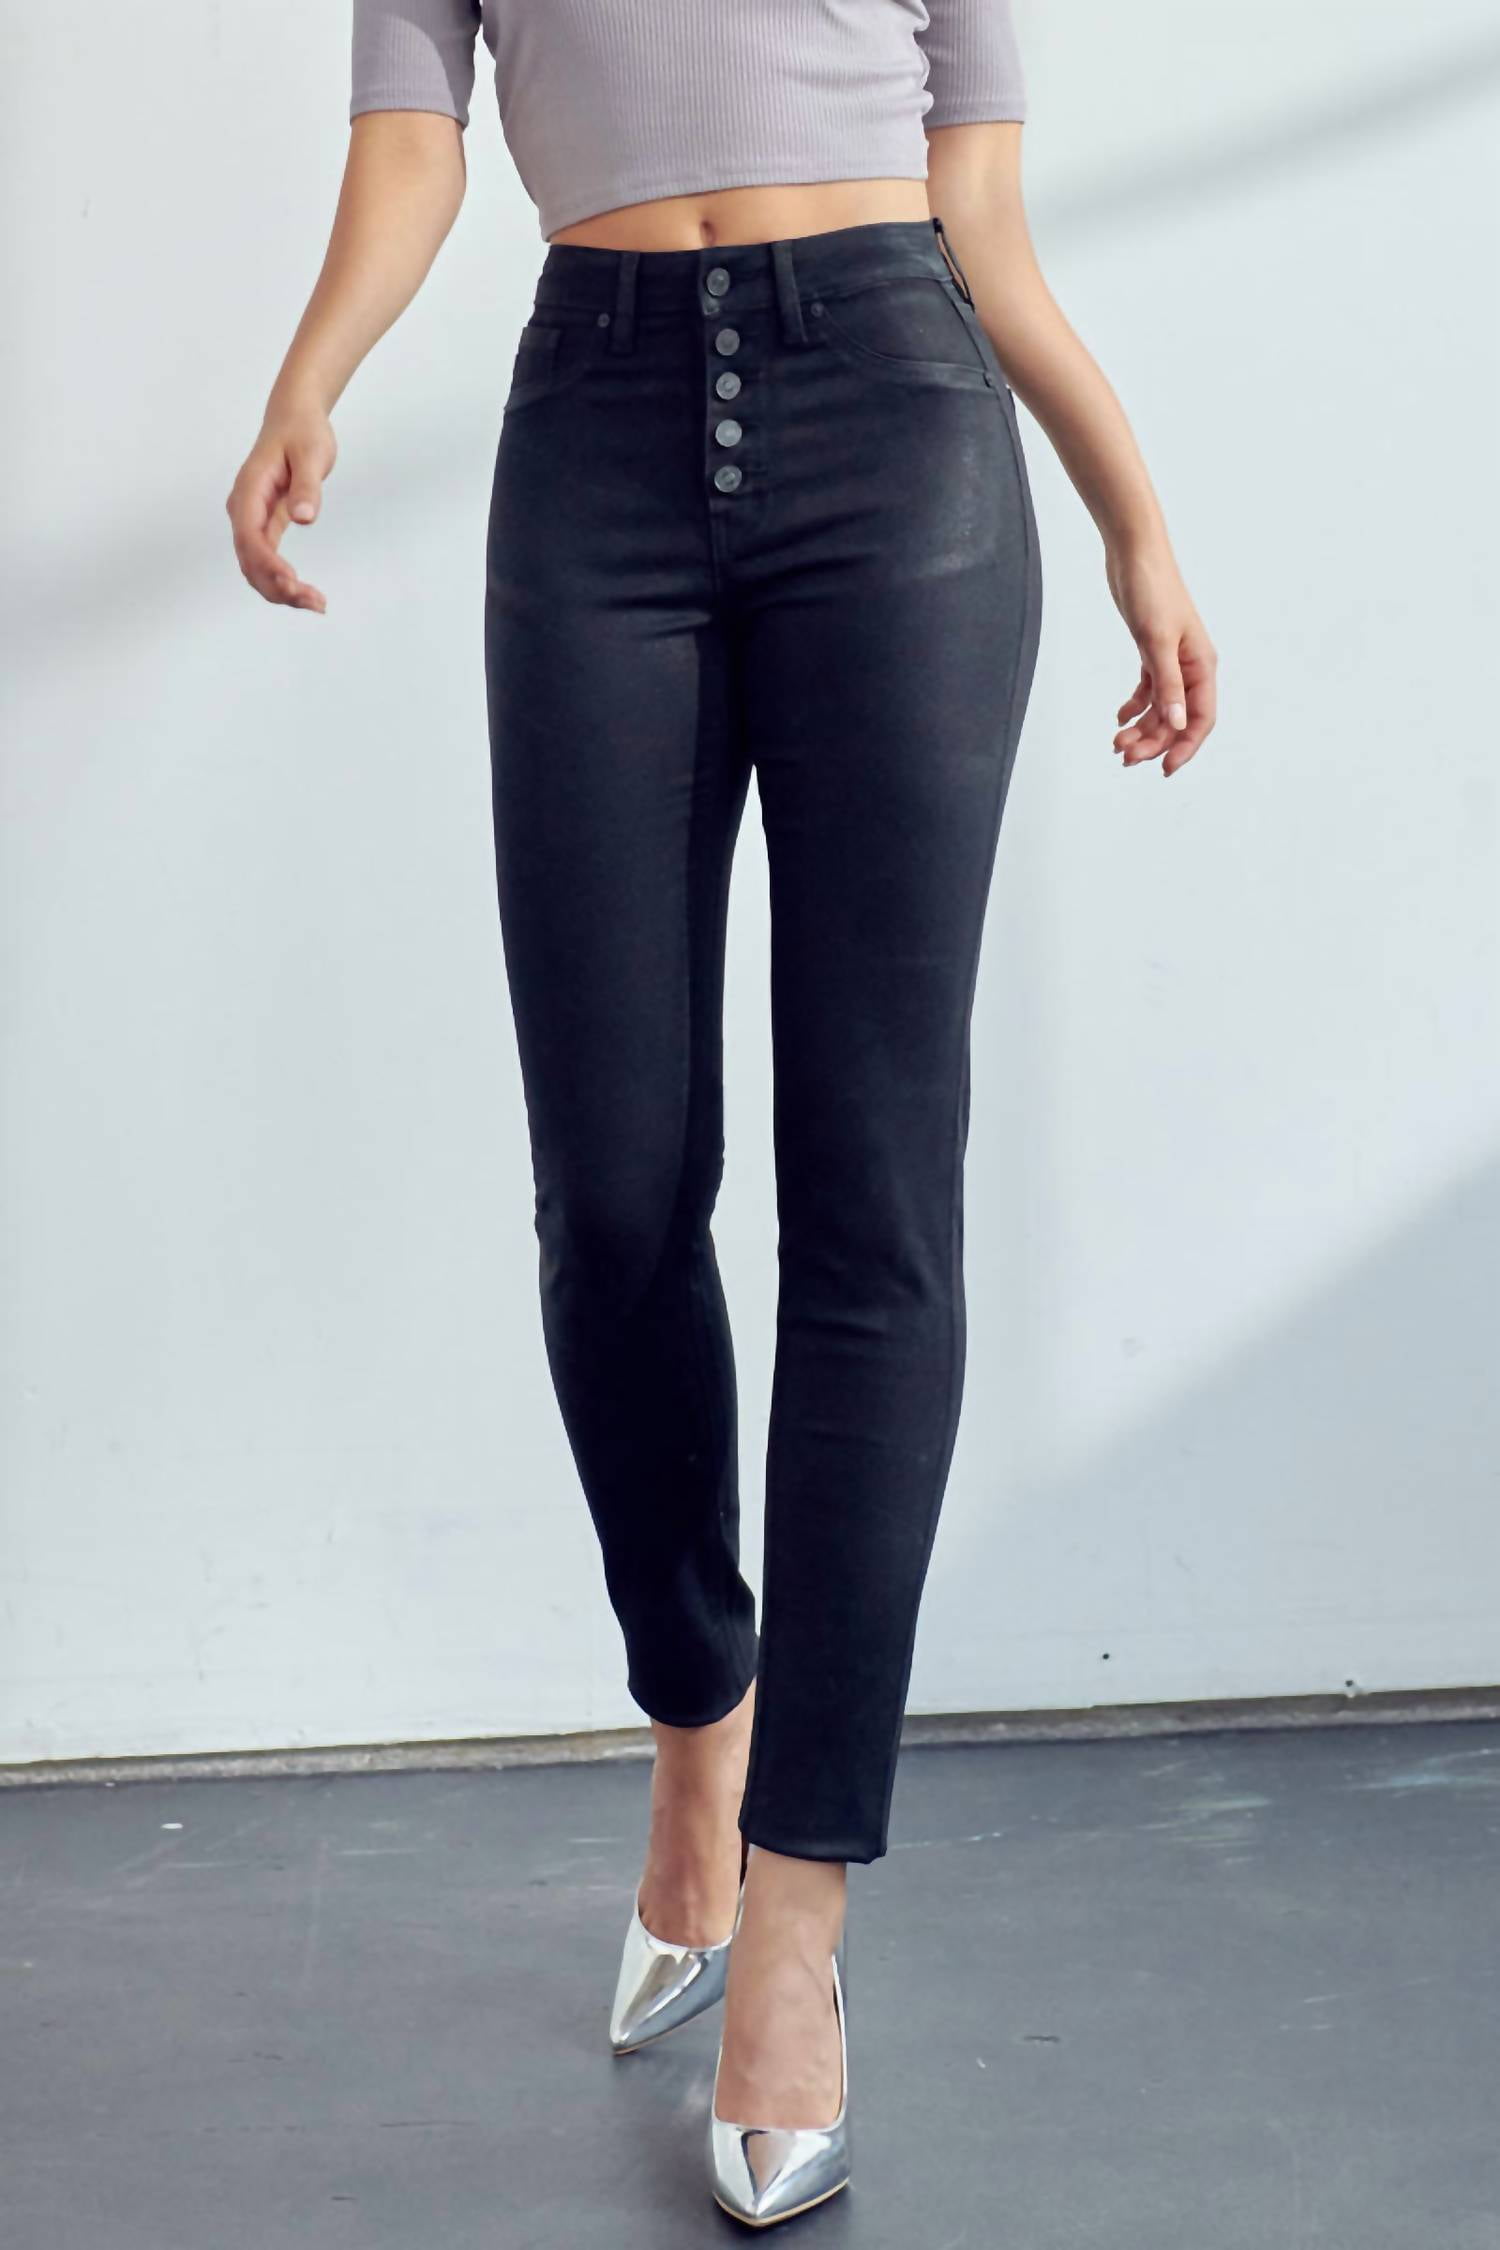 KanCan Sabrina High Rise Super Skinny Jeans - Walmart.com